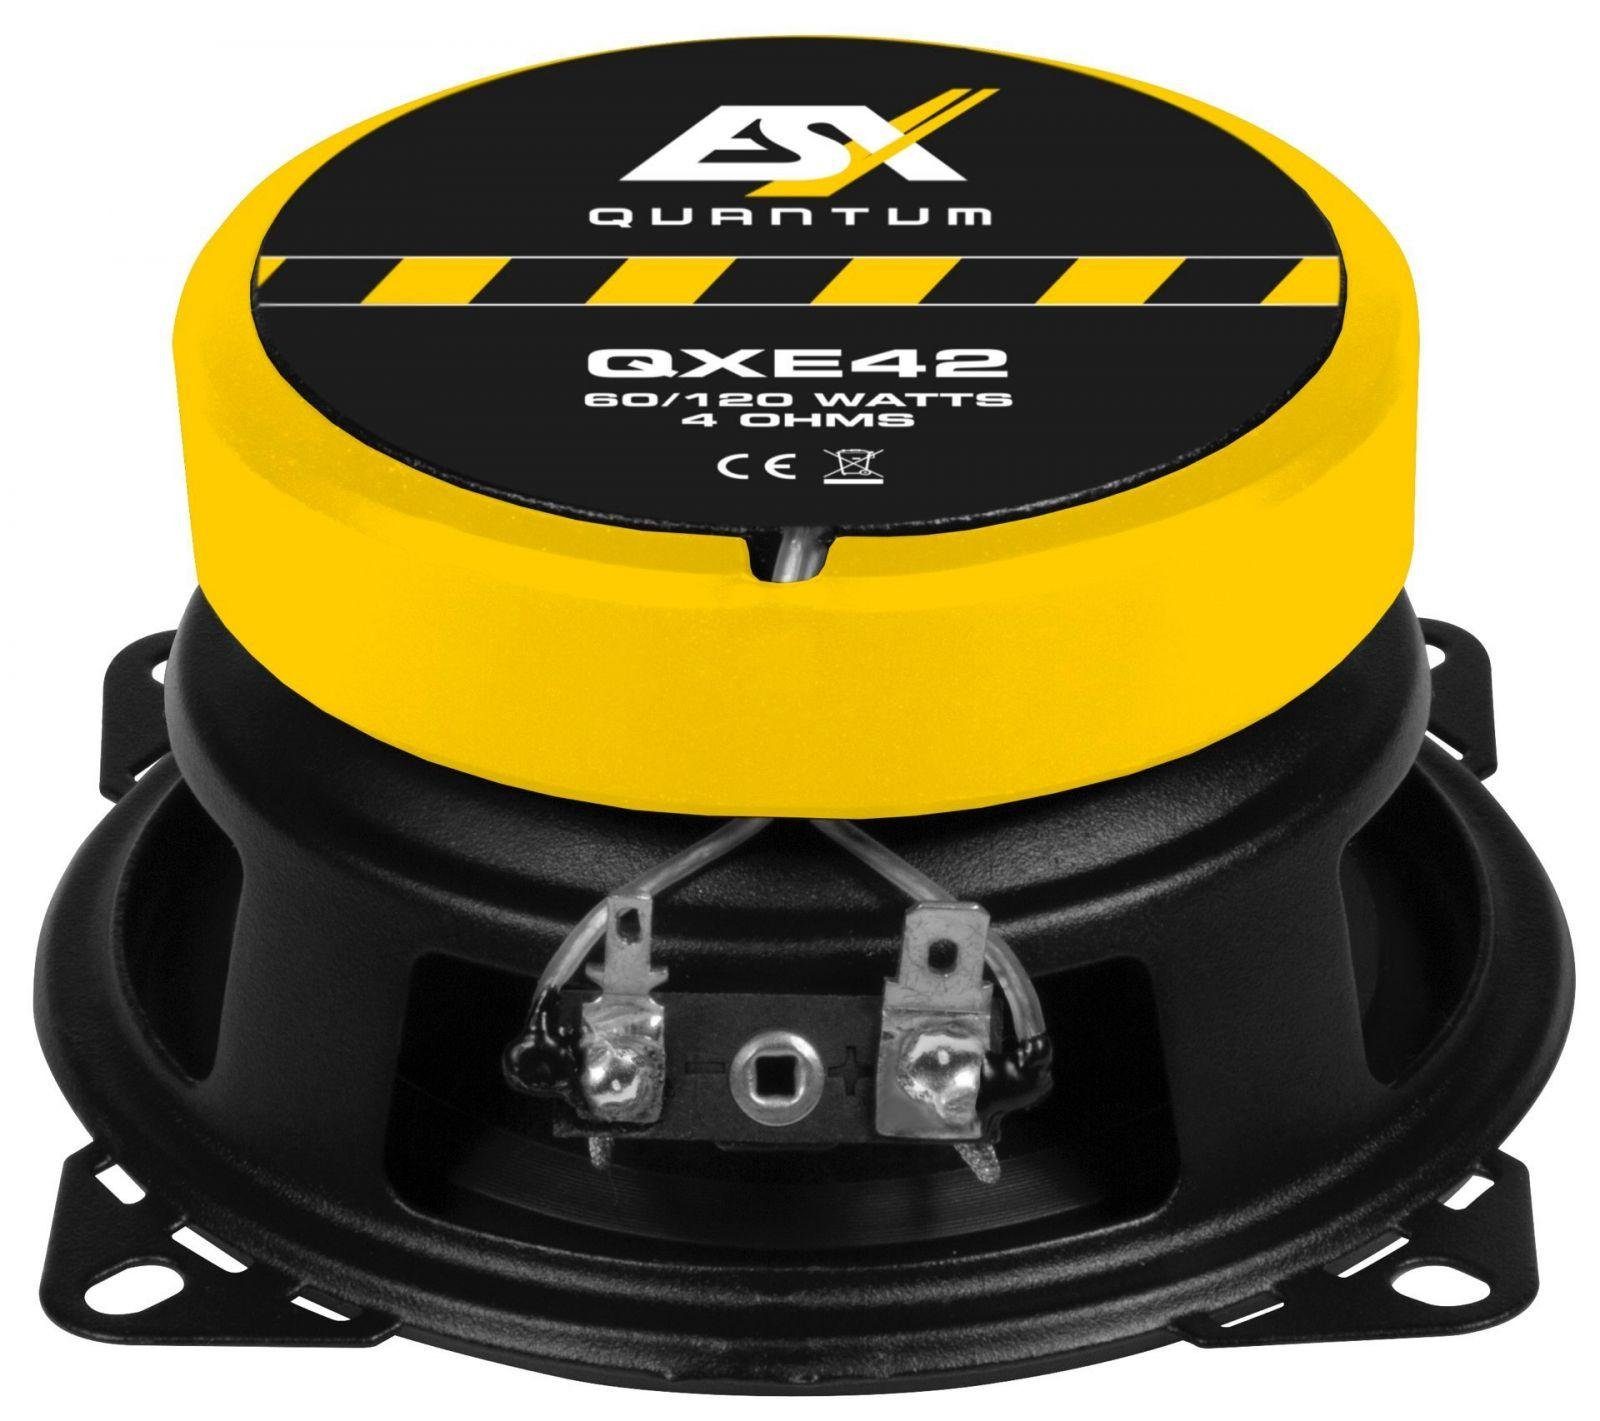 Koax mit QXE-42 Auto-Lautsprecher cm 120 Watt QUANTUM 2-Wege ESX 10